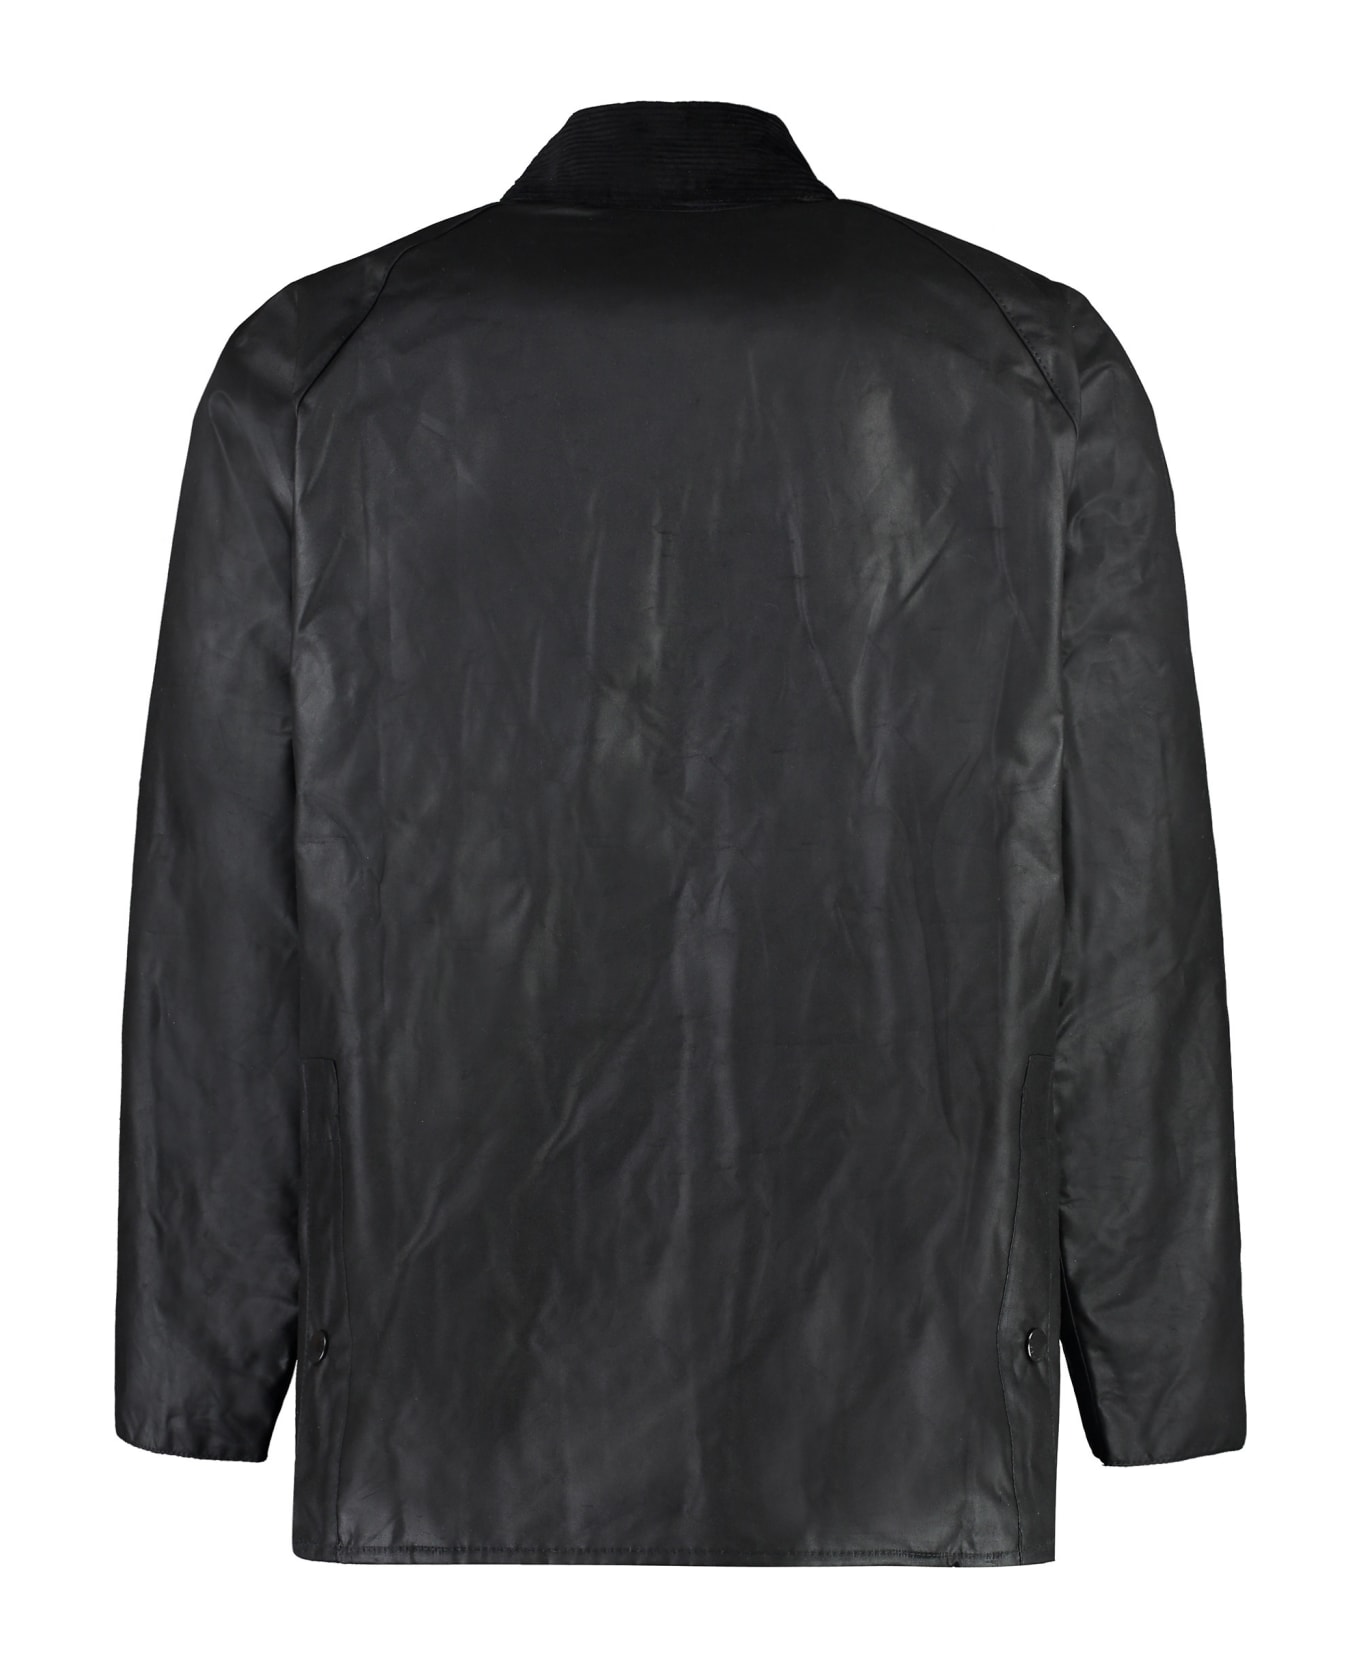 Barbour Bedale Waxed Cotton Jacket - black